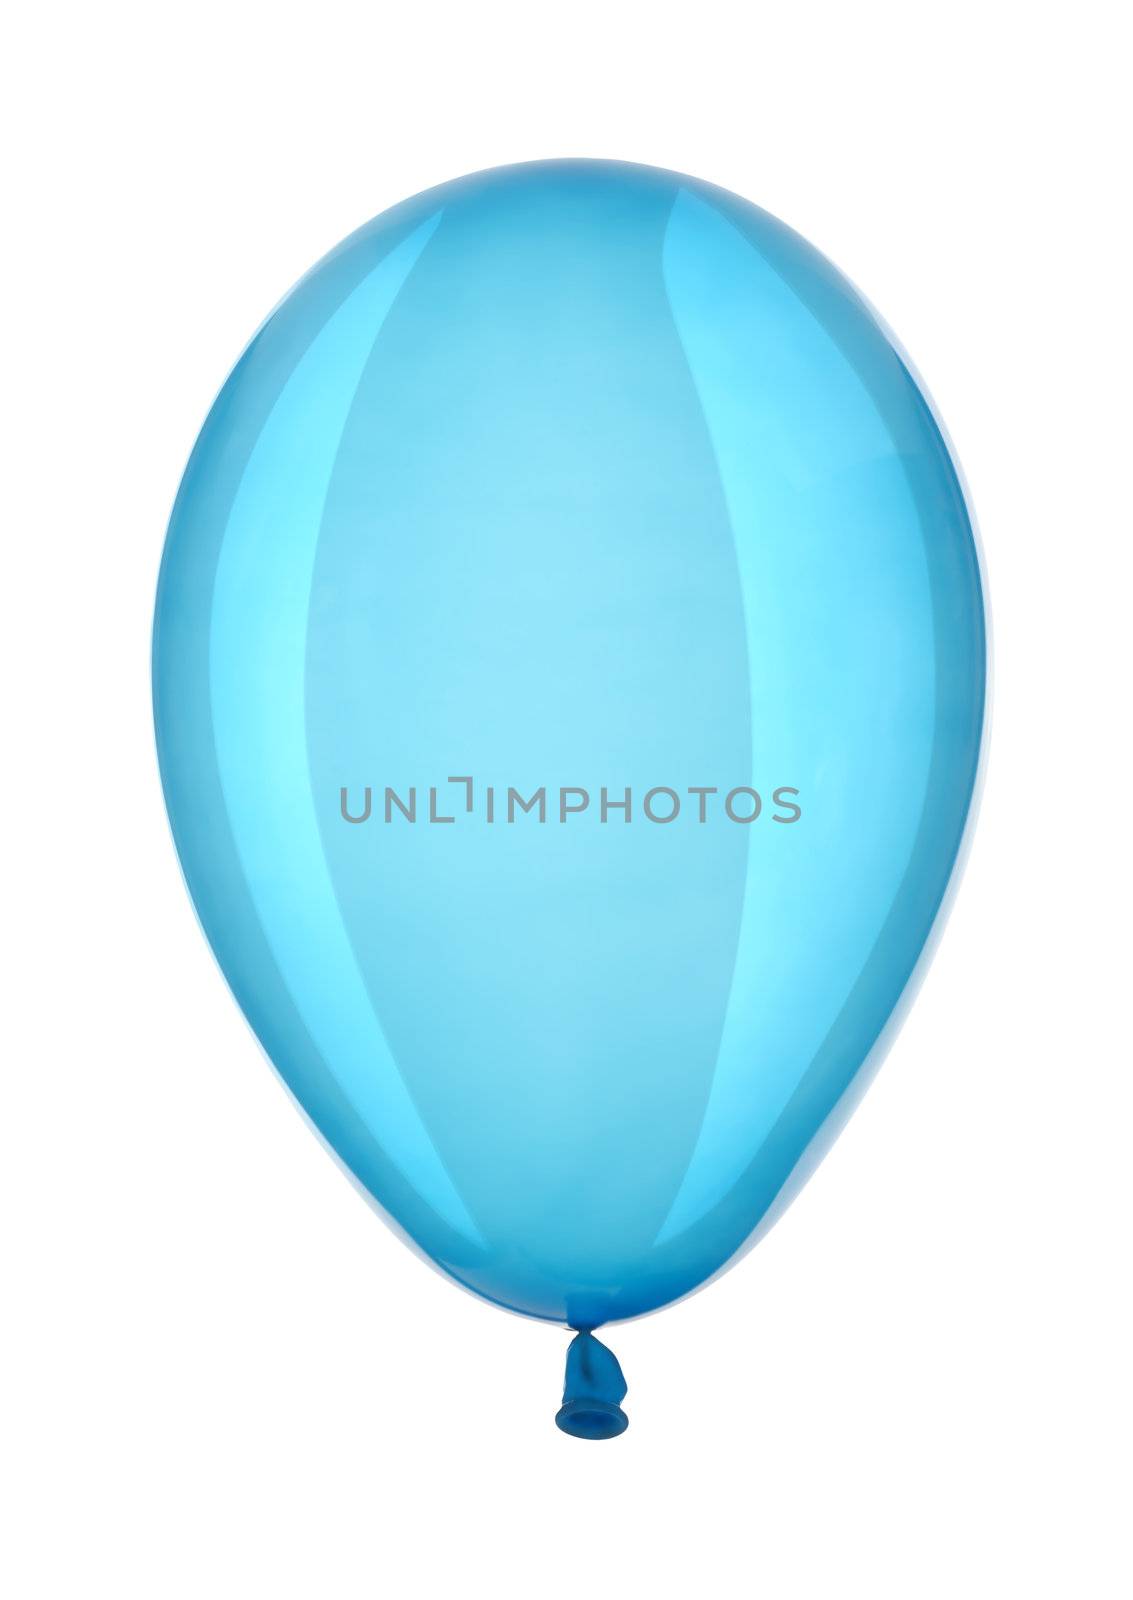 Blue balloon by Givaga